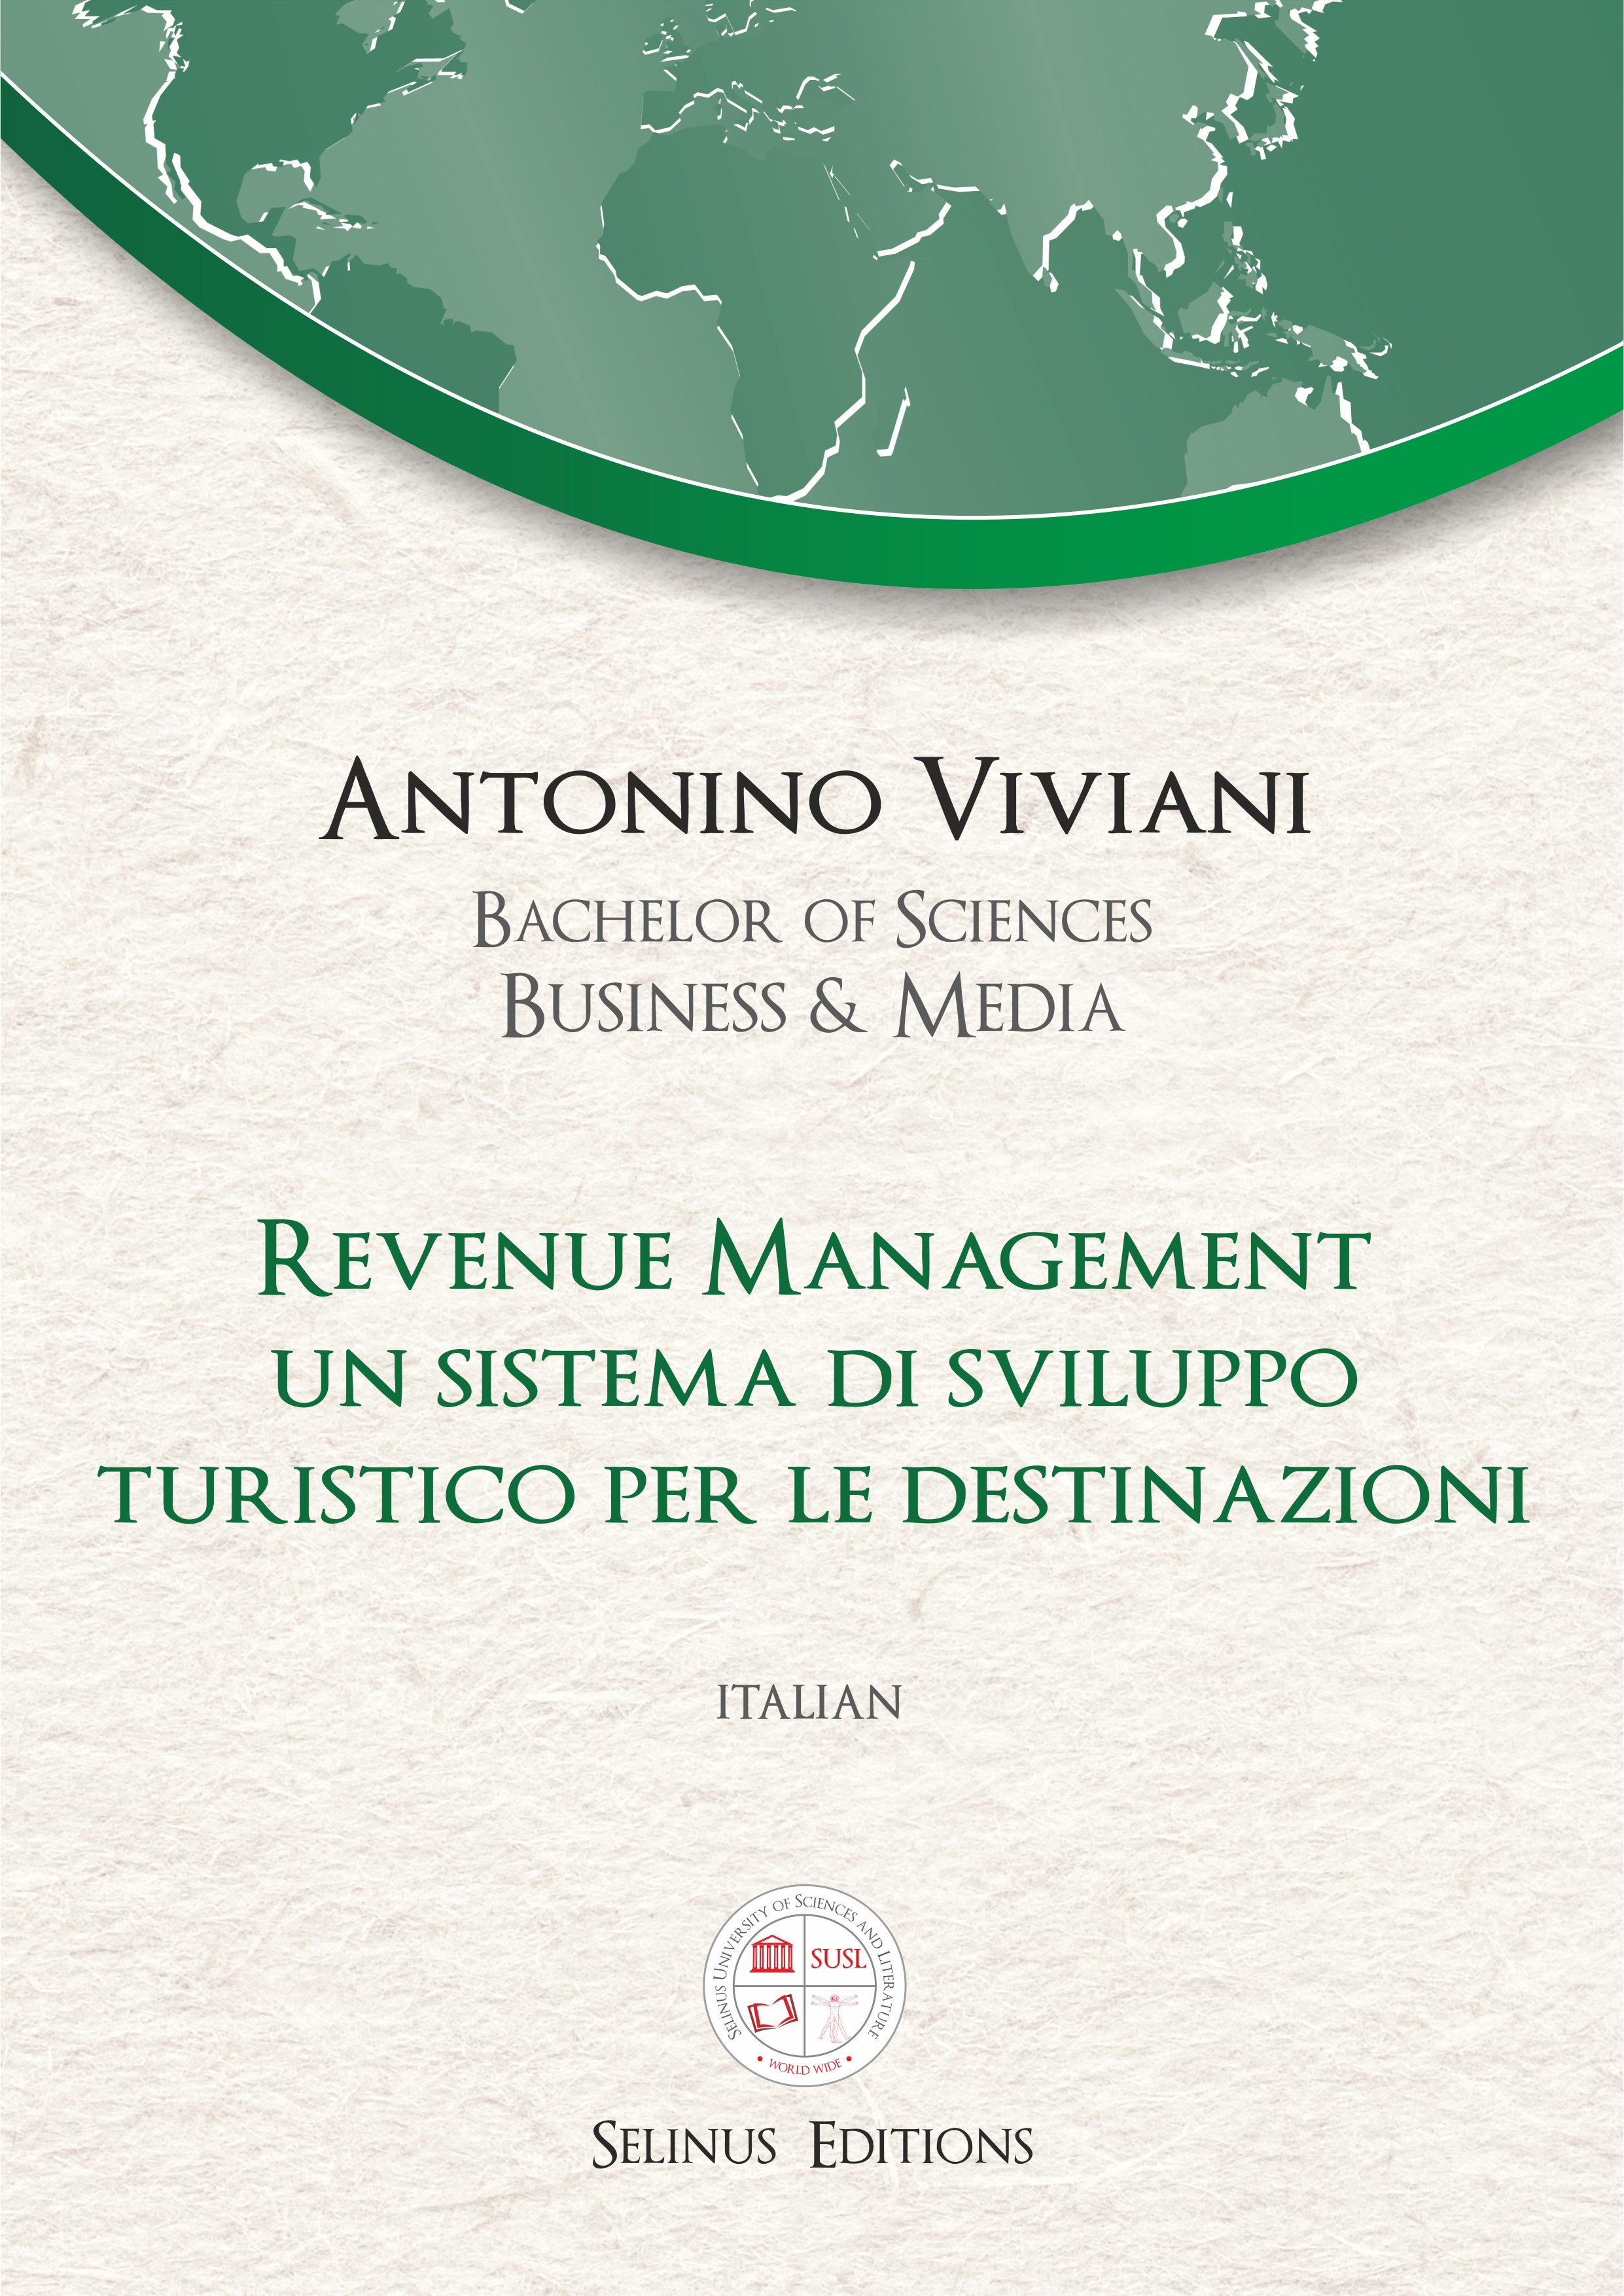 Thesis Antonino Viviani